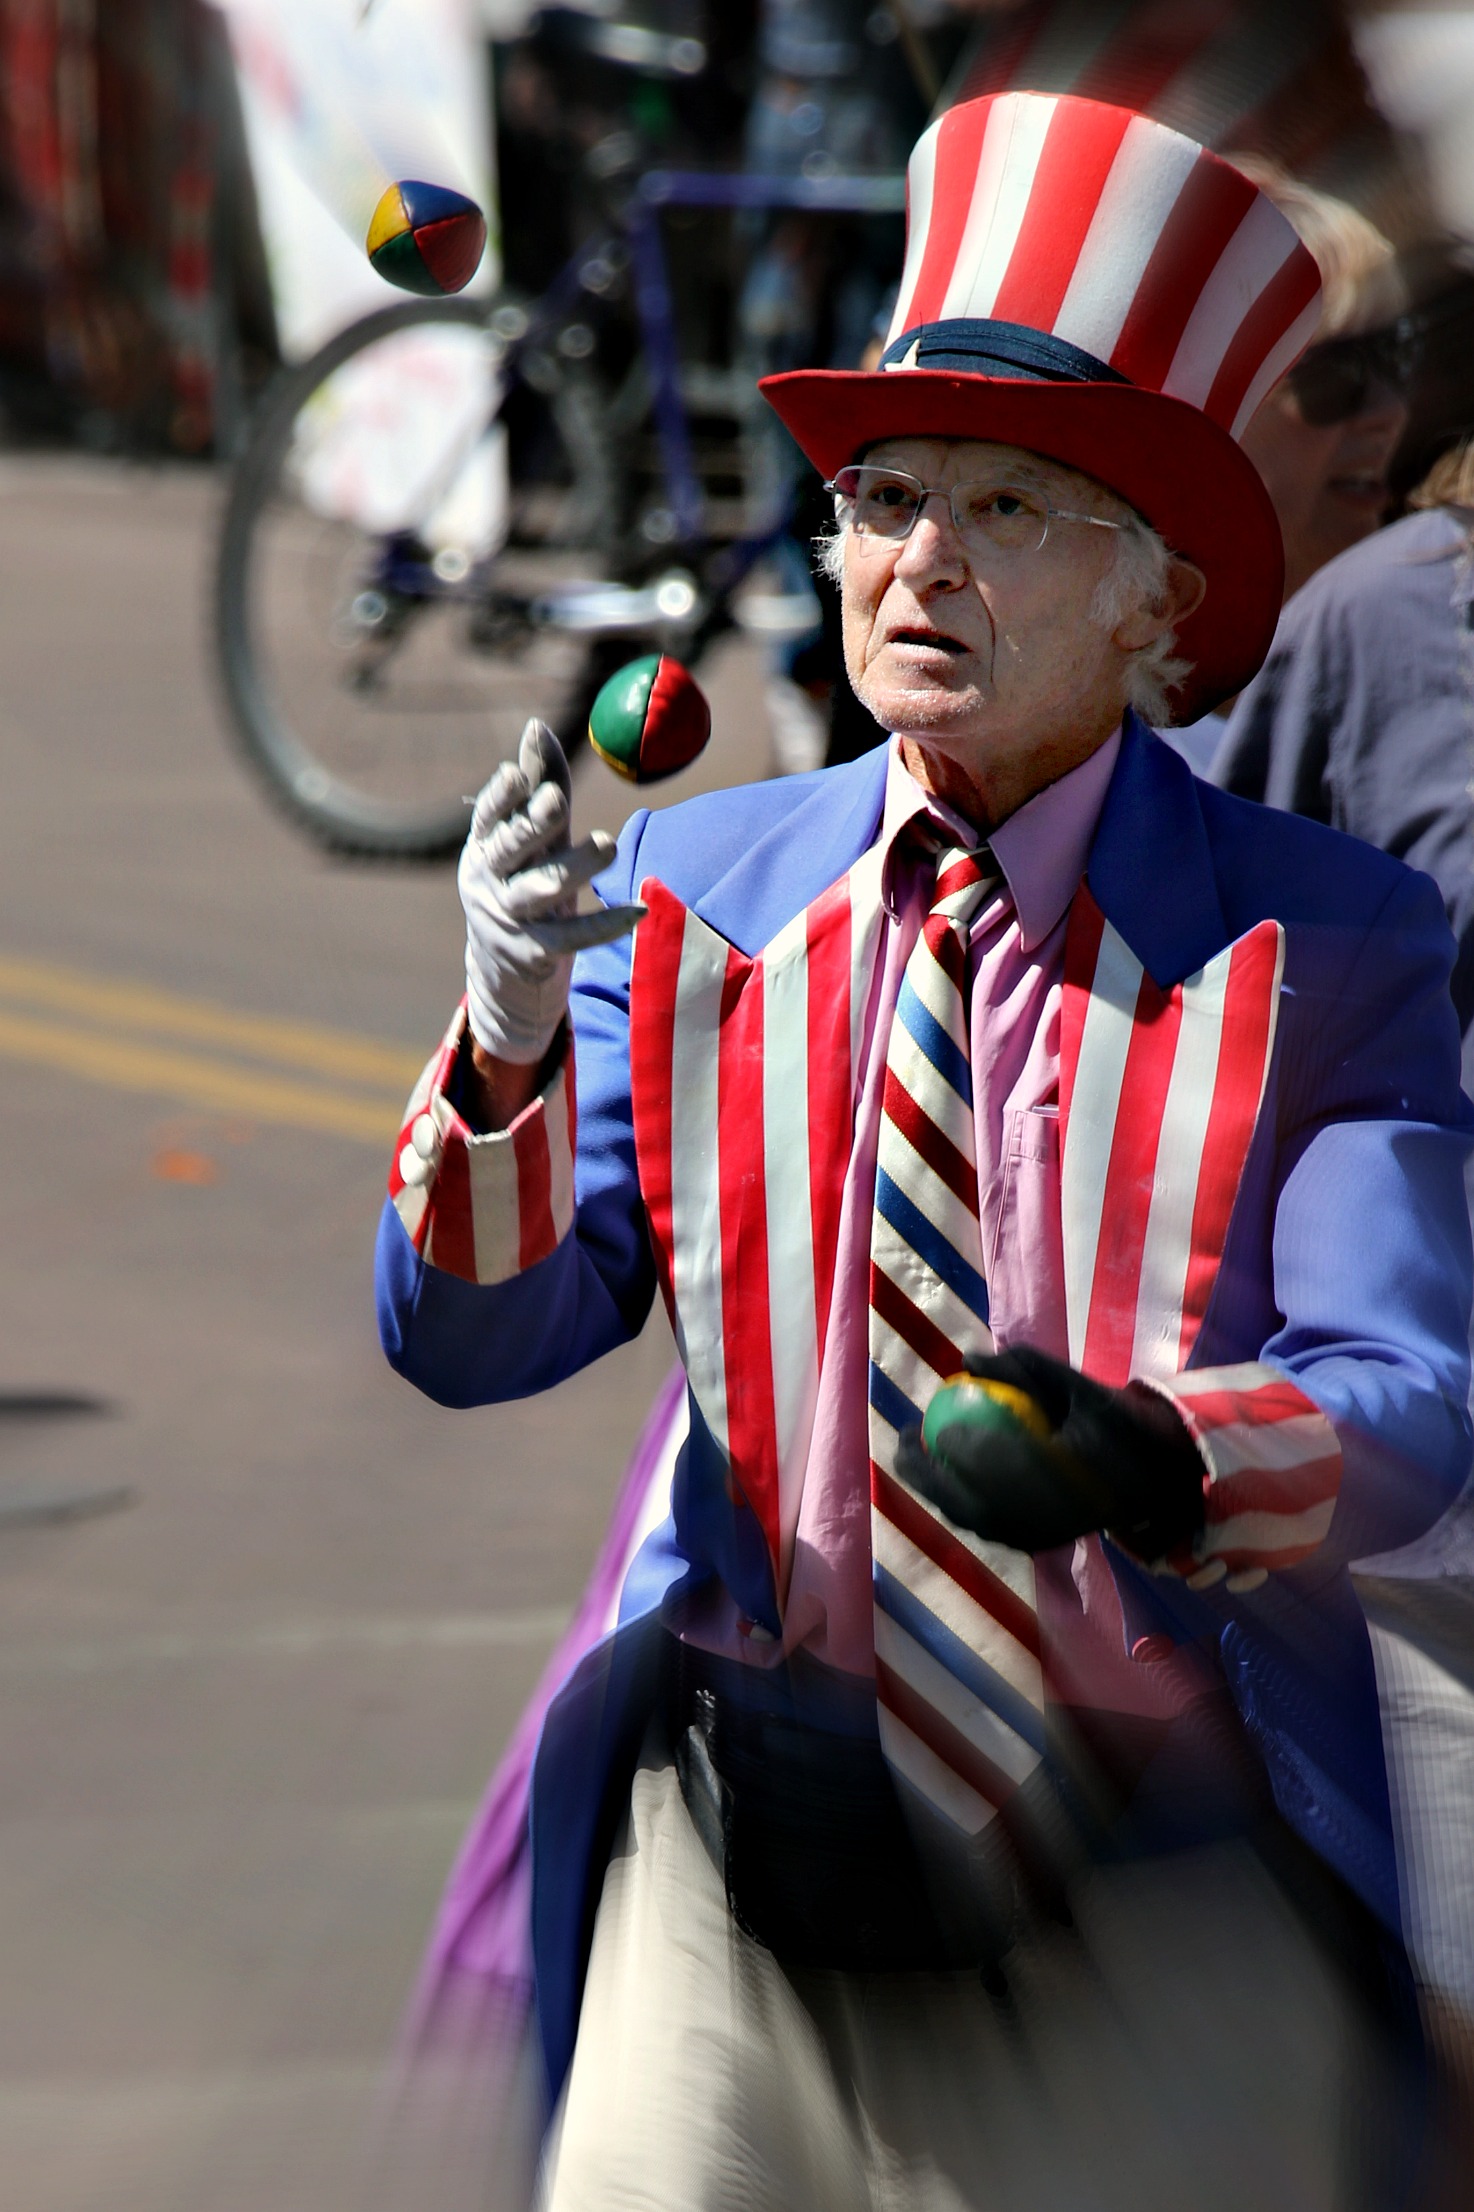 Older man juggling balls